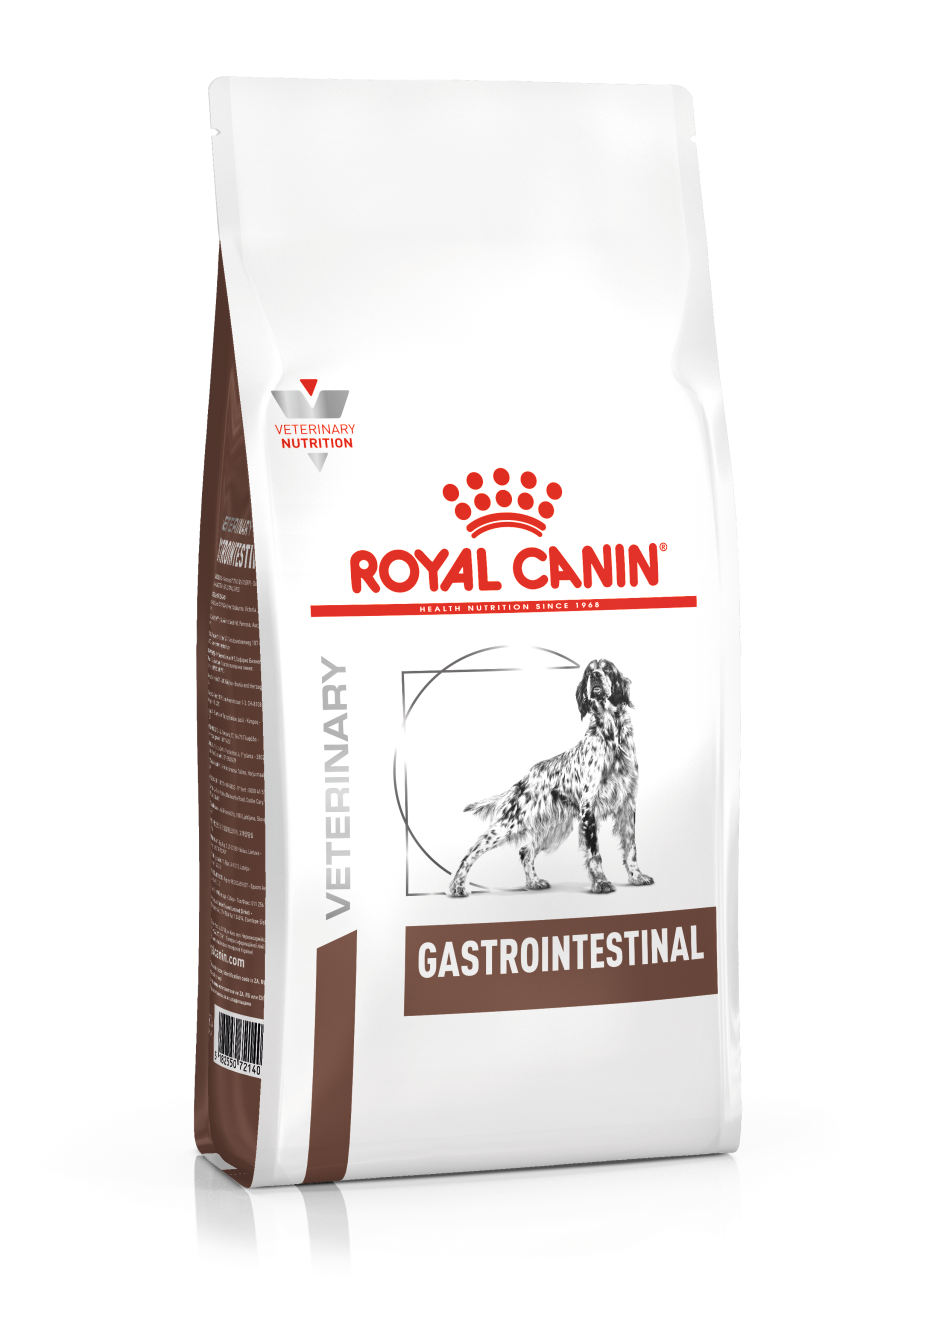 Royal Canin Gastro Intestinal hond 1x 2 kg